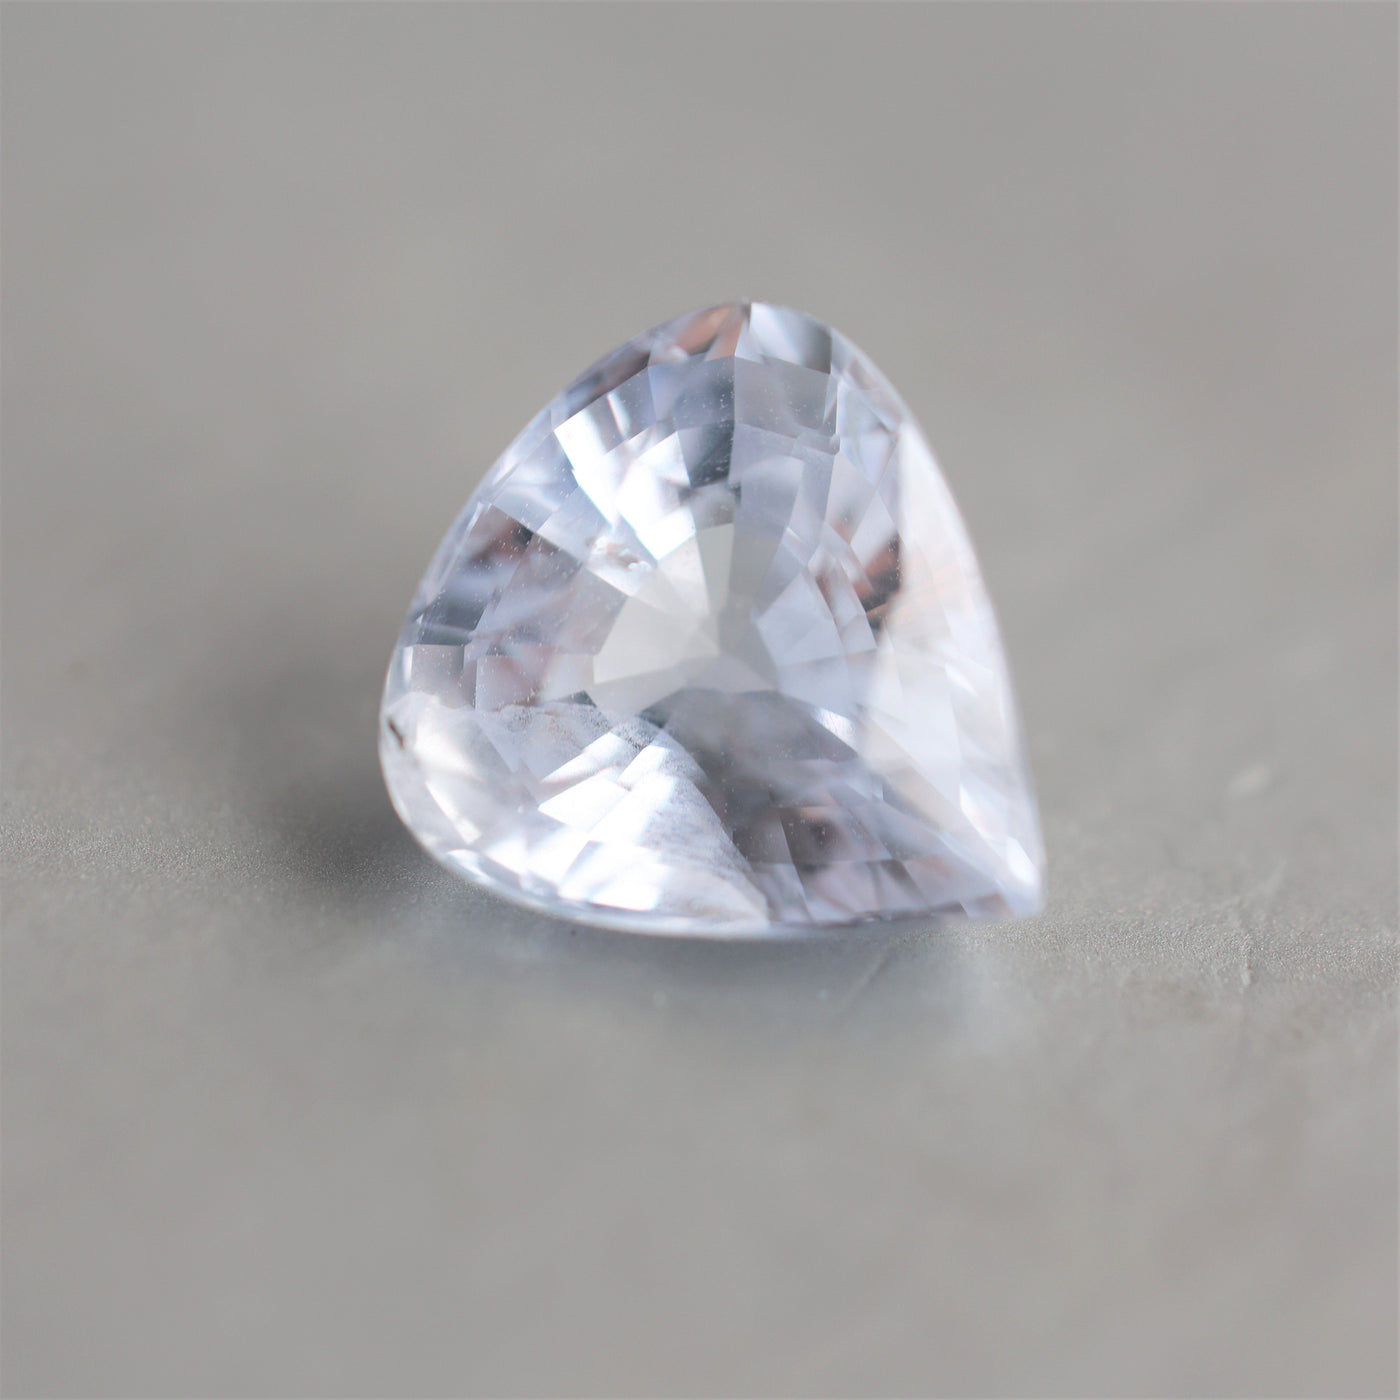 Loose pear-shaped light blue sapphire